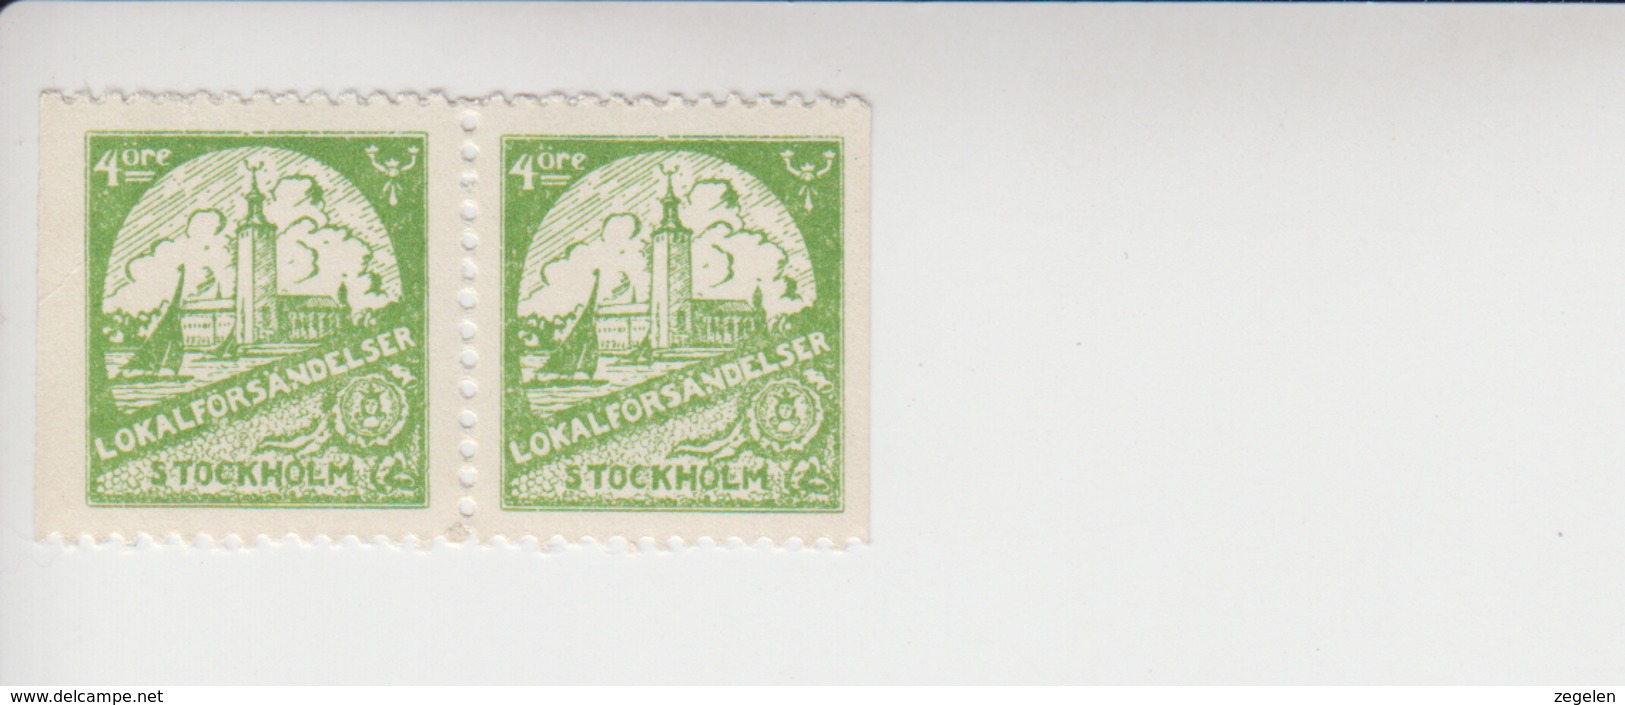 Zweden Lokale Post Facit-cataloog Stockholm Lokalförsändelser 2B ** Paar Uit Boekje 3-zijdig Getand - Local Post Stamps